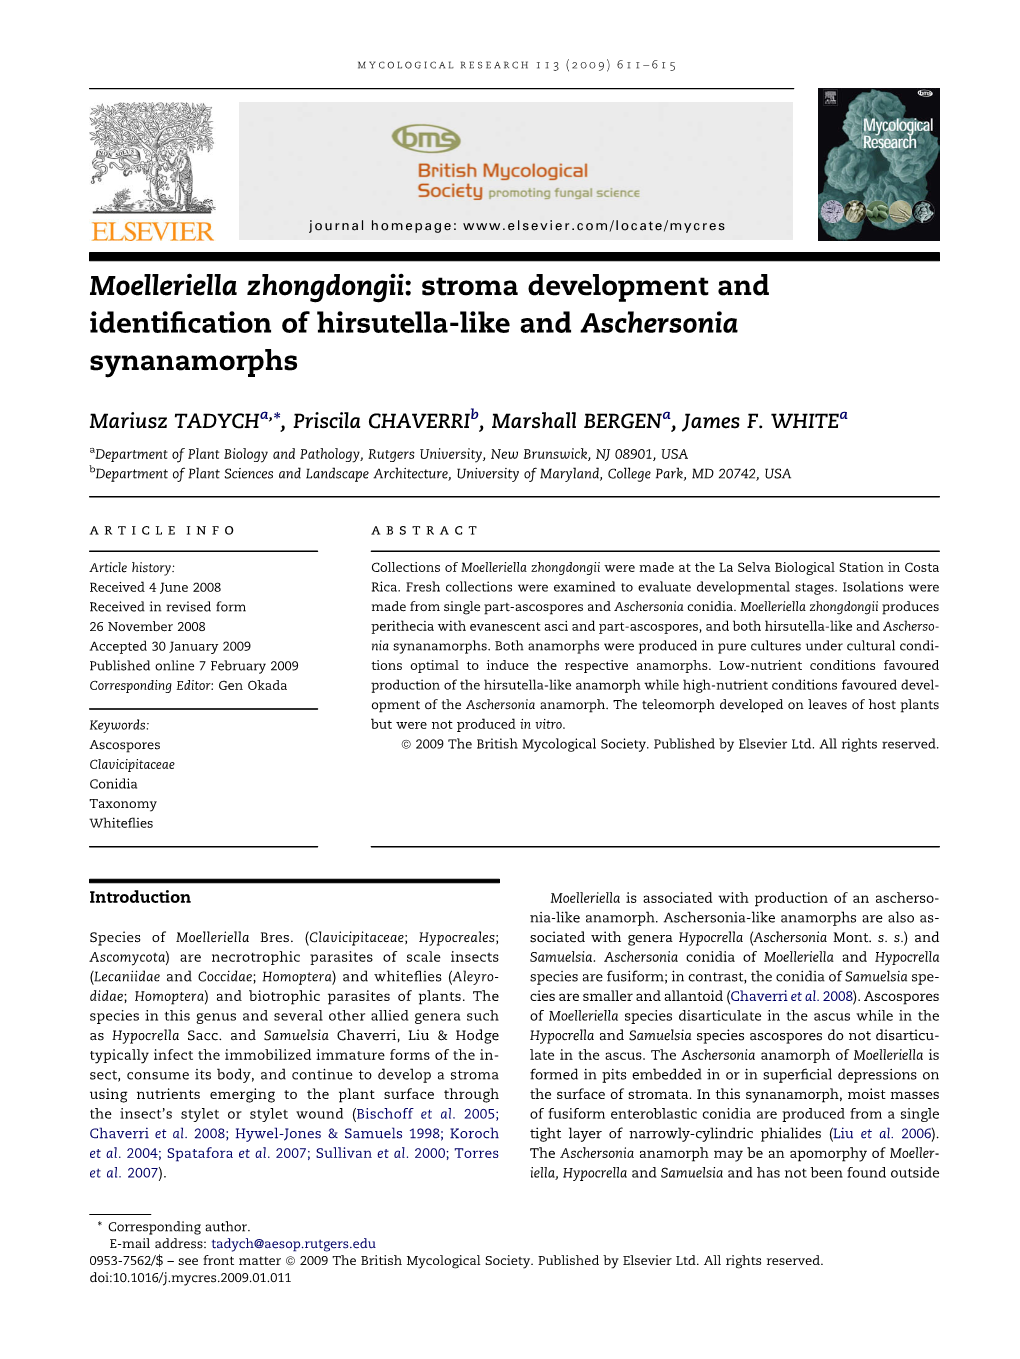 Stroma Development and Identification of Hirsutella-Like and Aschersonia